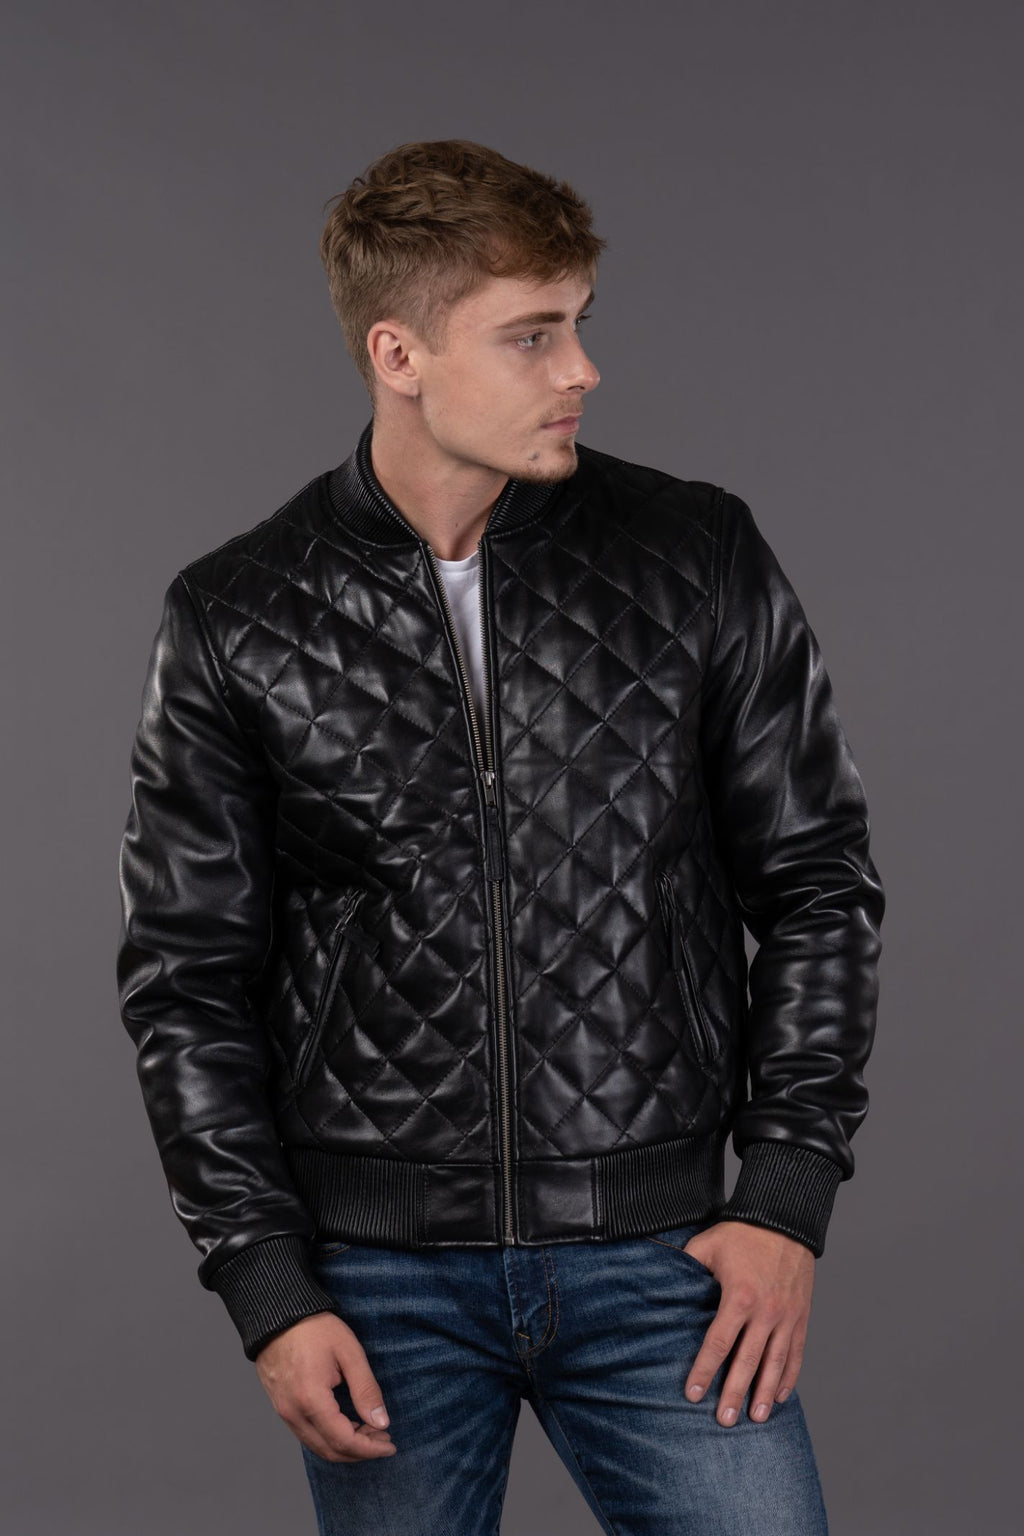 Men's Leather Jackets & Clothing | Exmore Bespoke Leather | Southgate ...